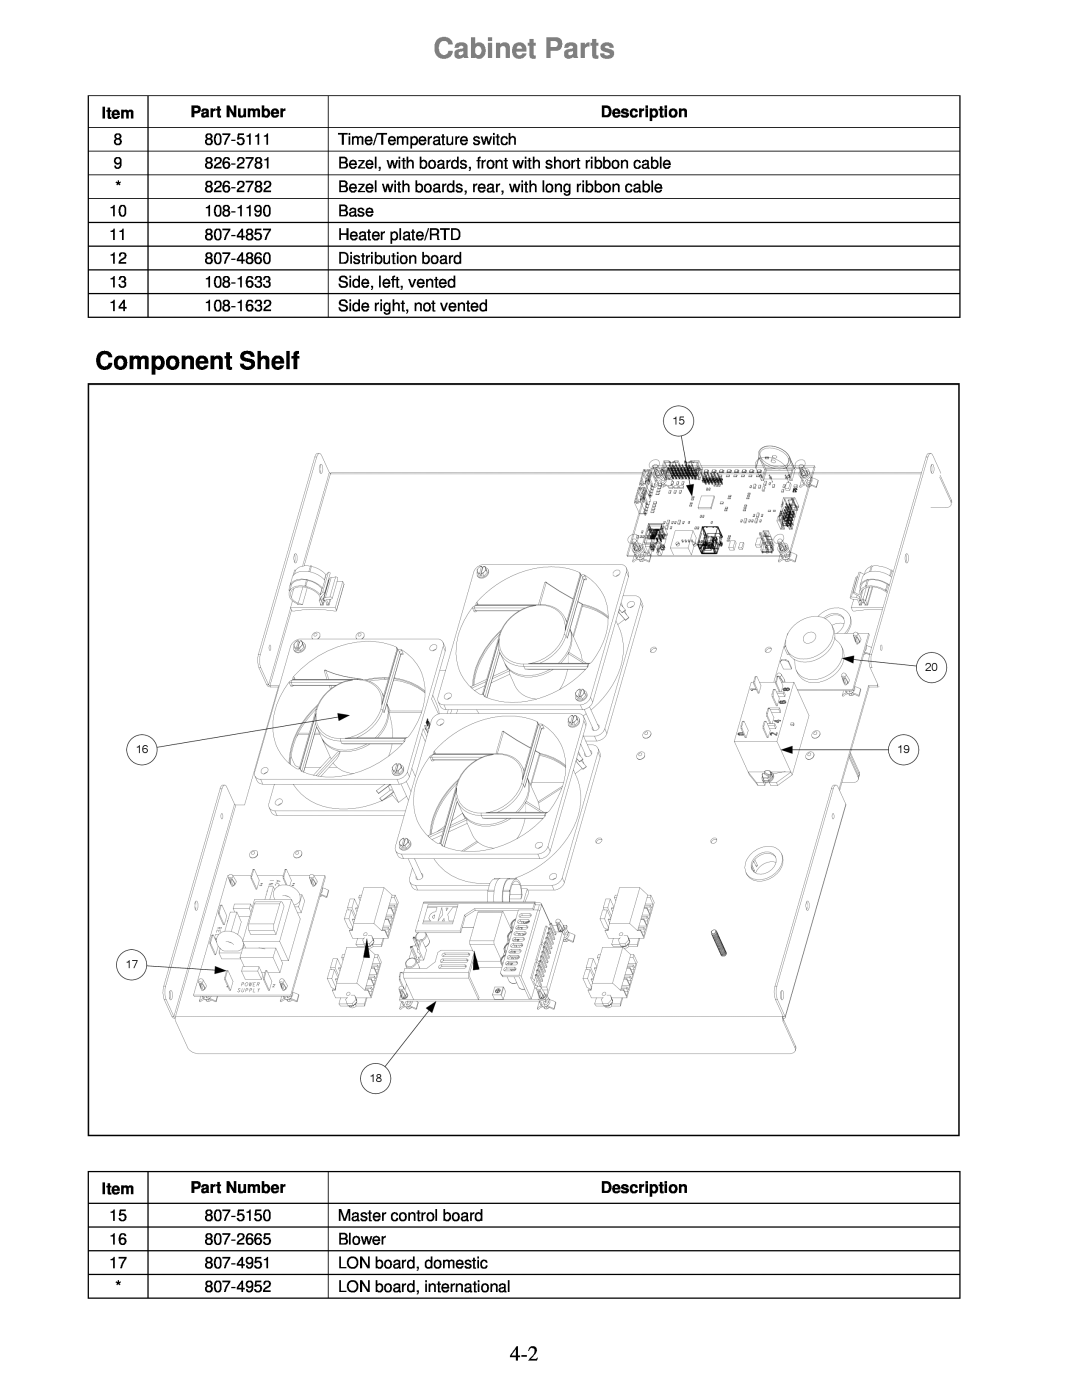 Frymaster UHC-HD manual Component Shelf, Cabinet Parts, Part Number, Description 